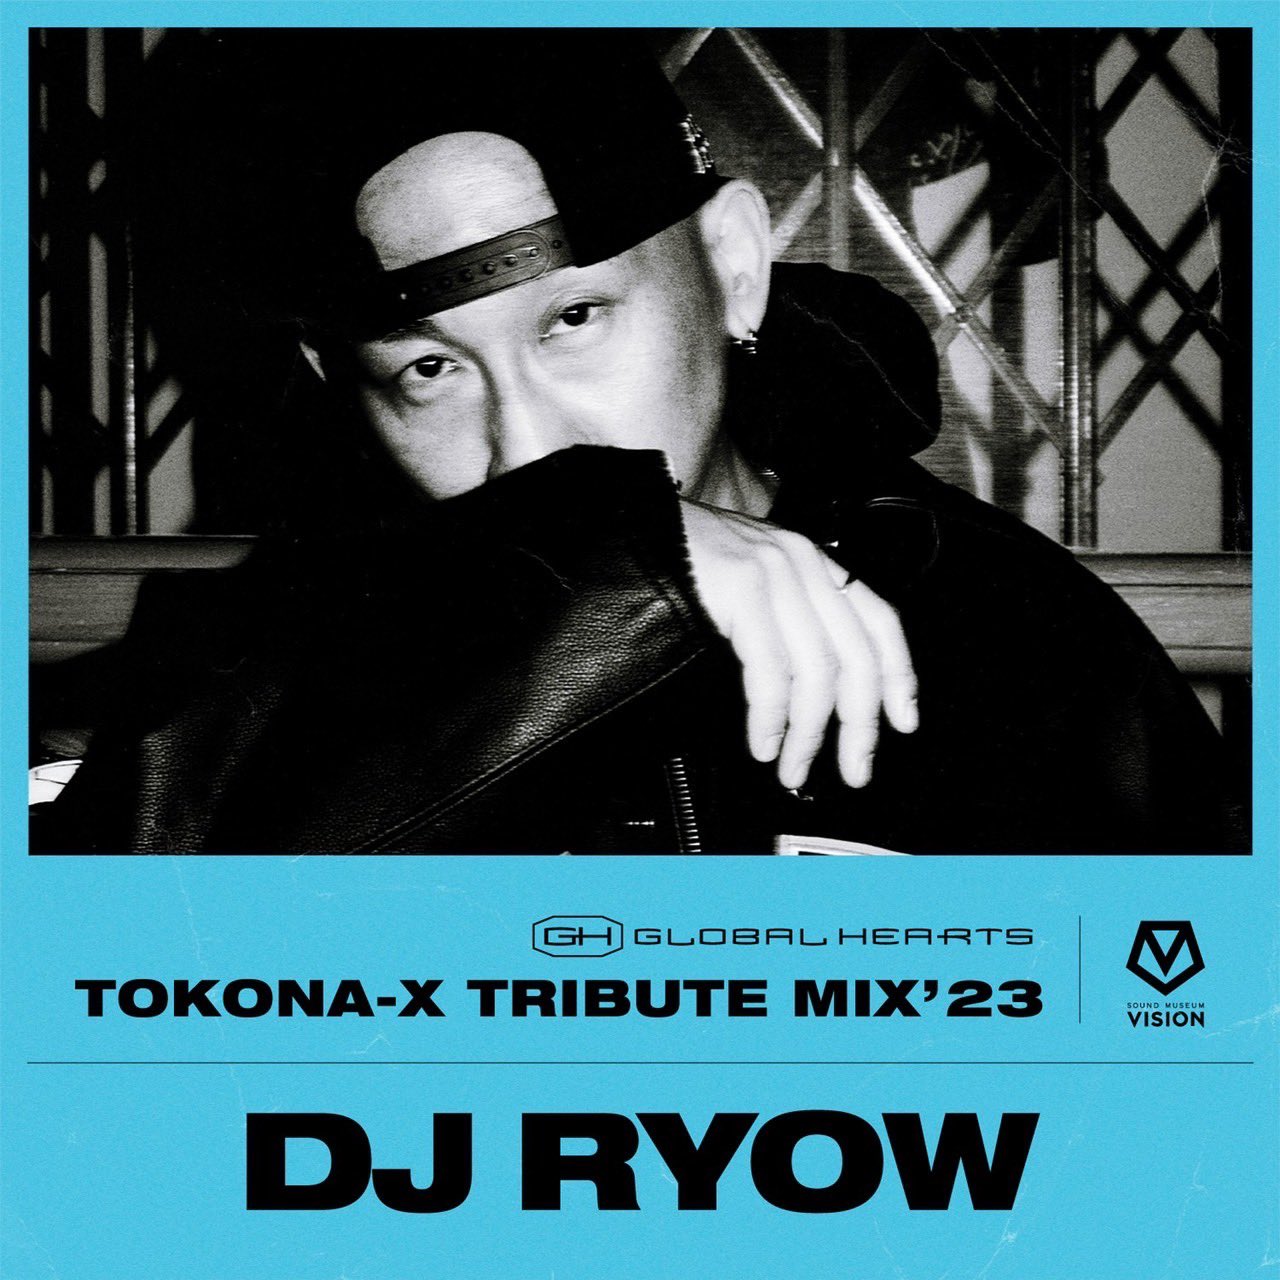 CD BEST OF TOKONA-X mixed by dj ryow - 邦楽